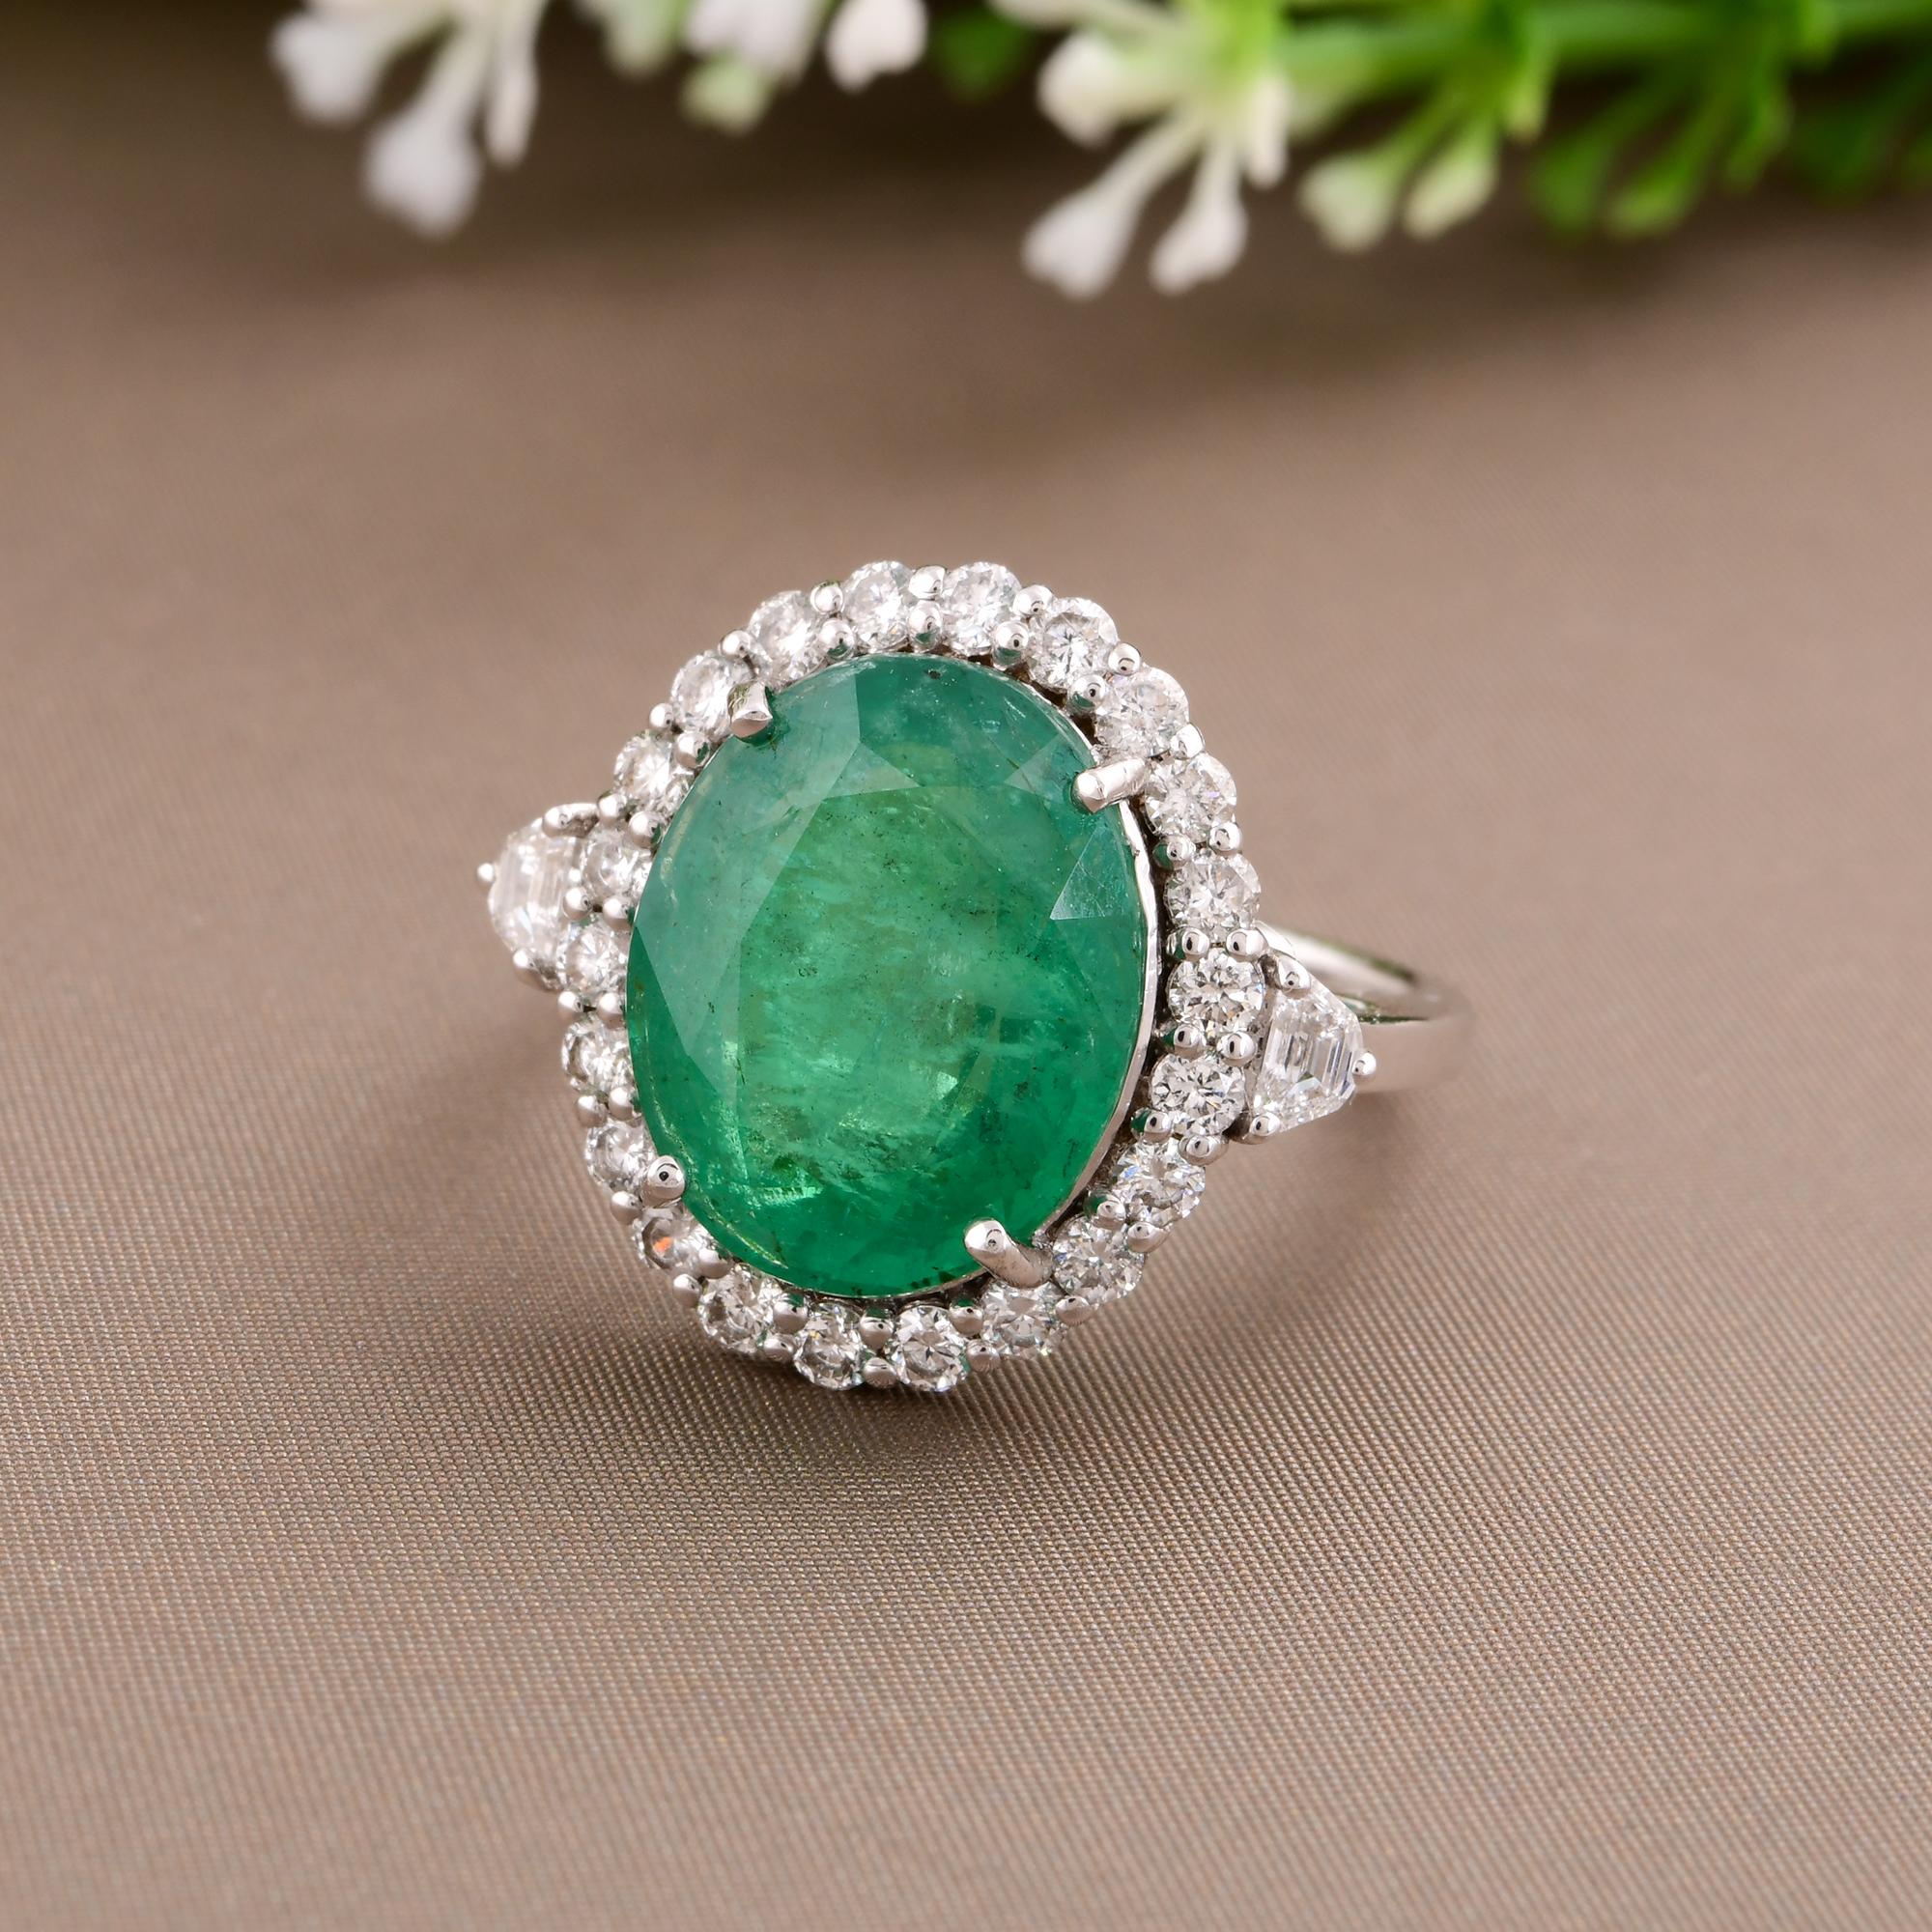 Oval Cut Zambian Emerald Gemstone Cocktail Ring Diamond 18 Karat White Gold Fine Jewelry For Sale